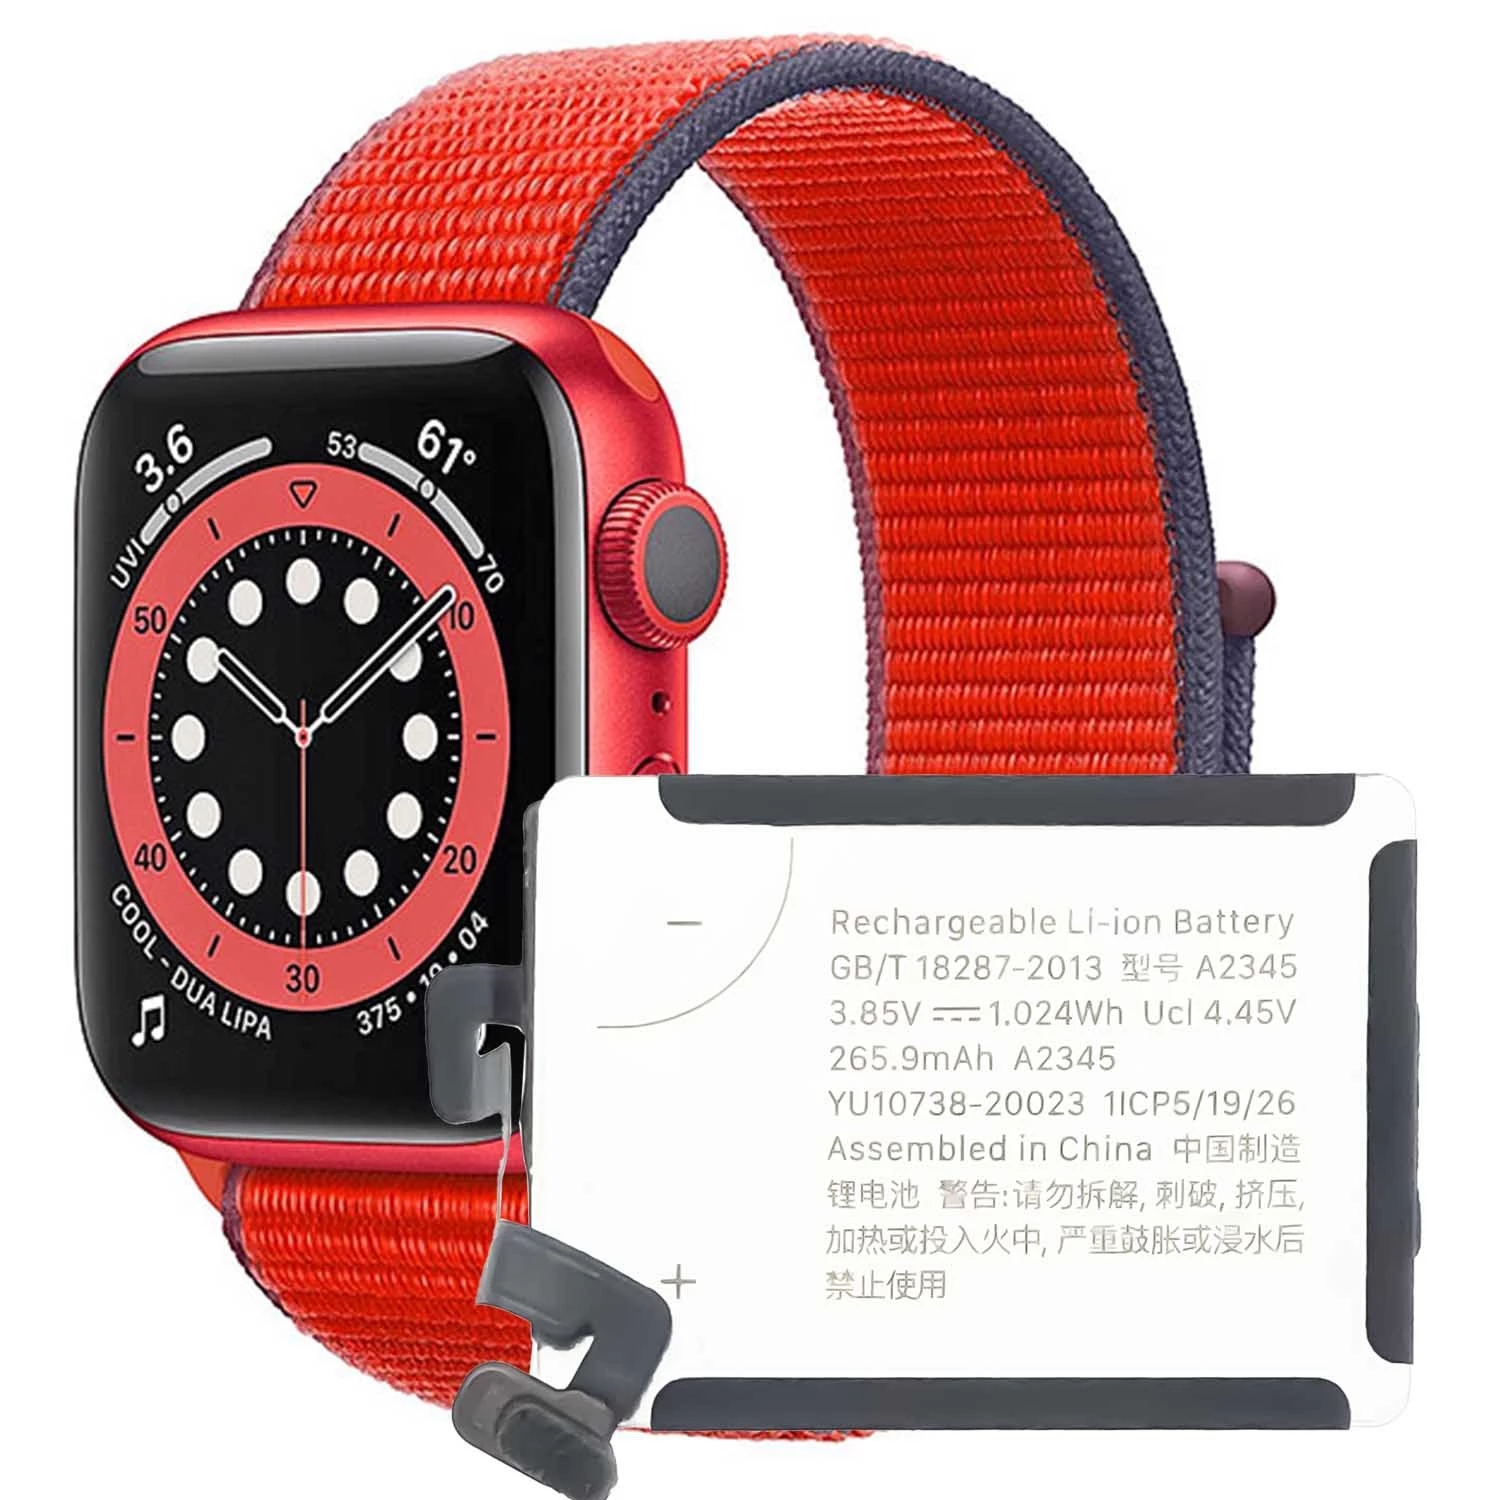 Apple Watch A2345 Battery